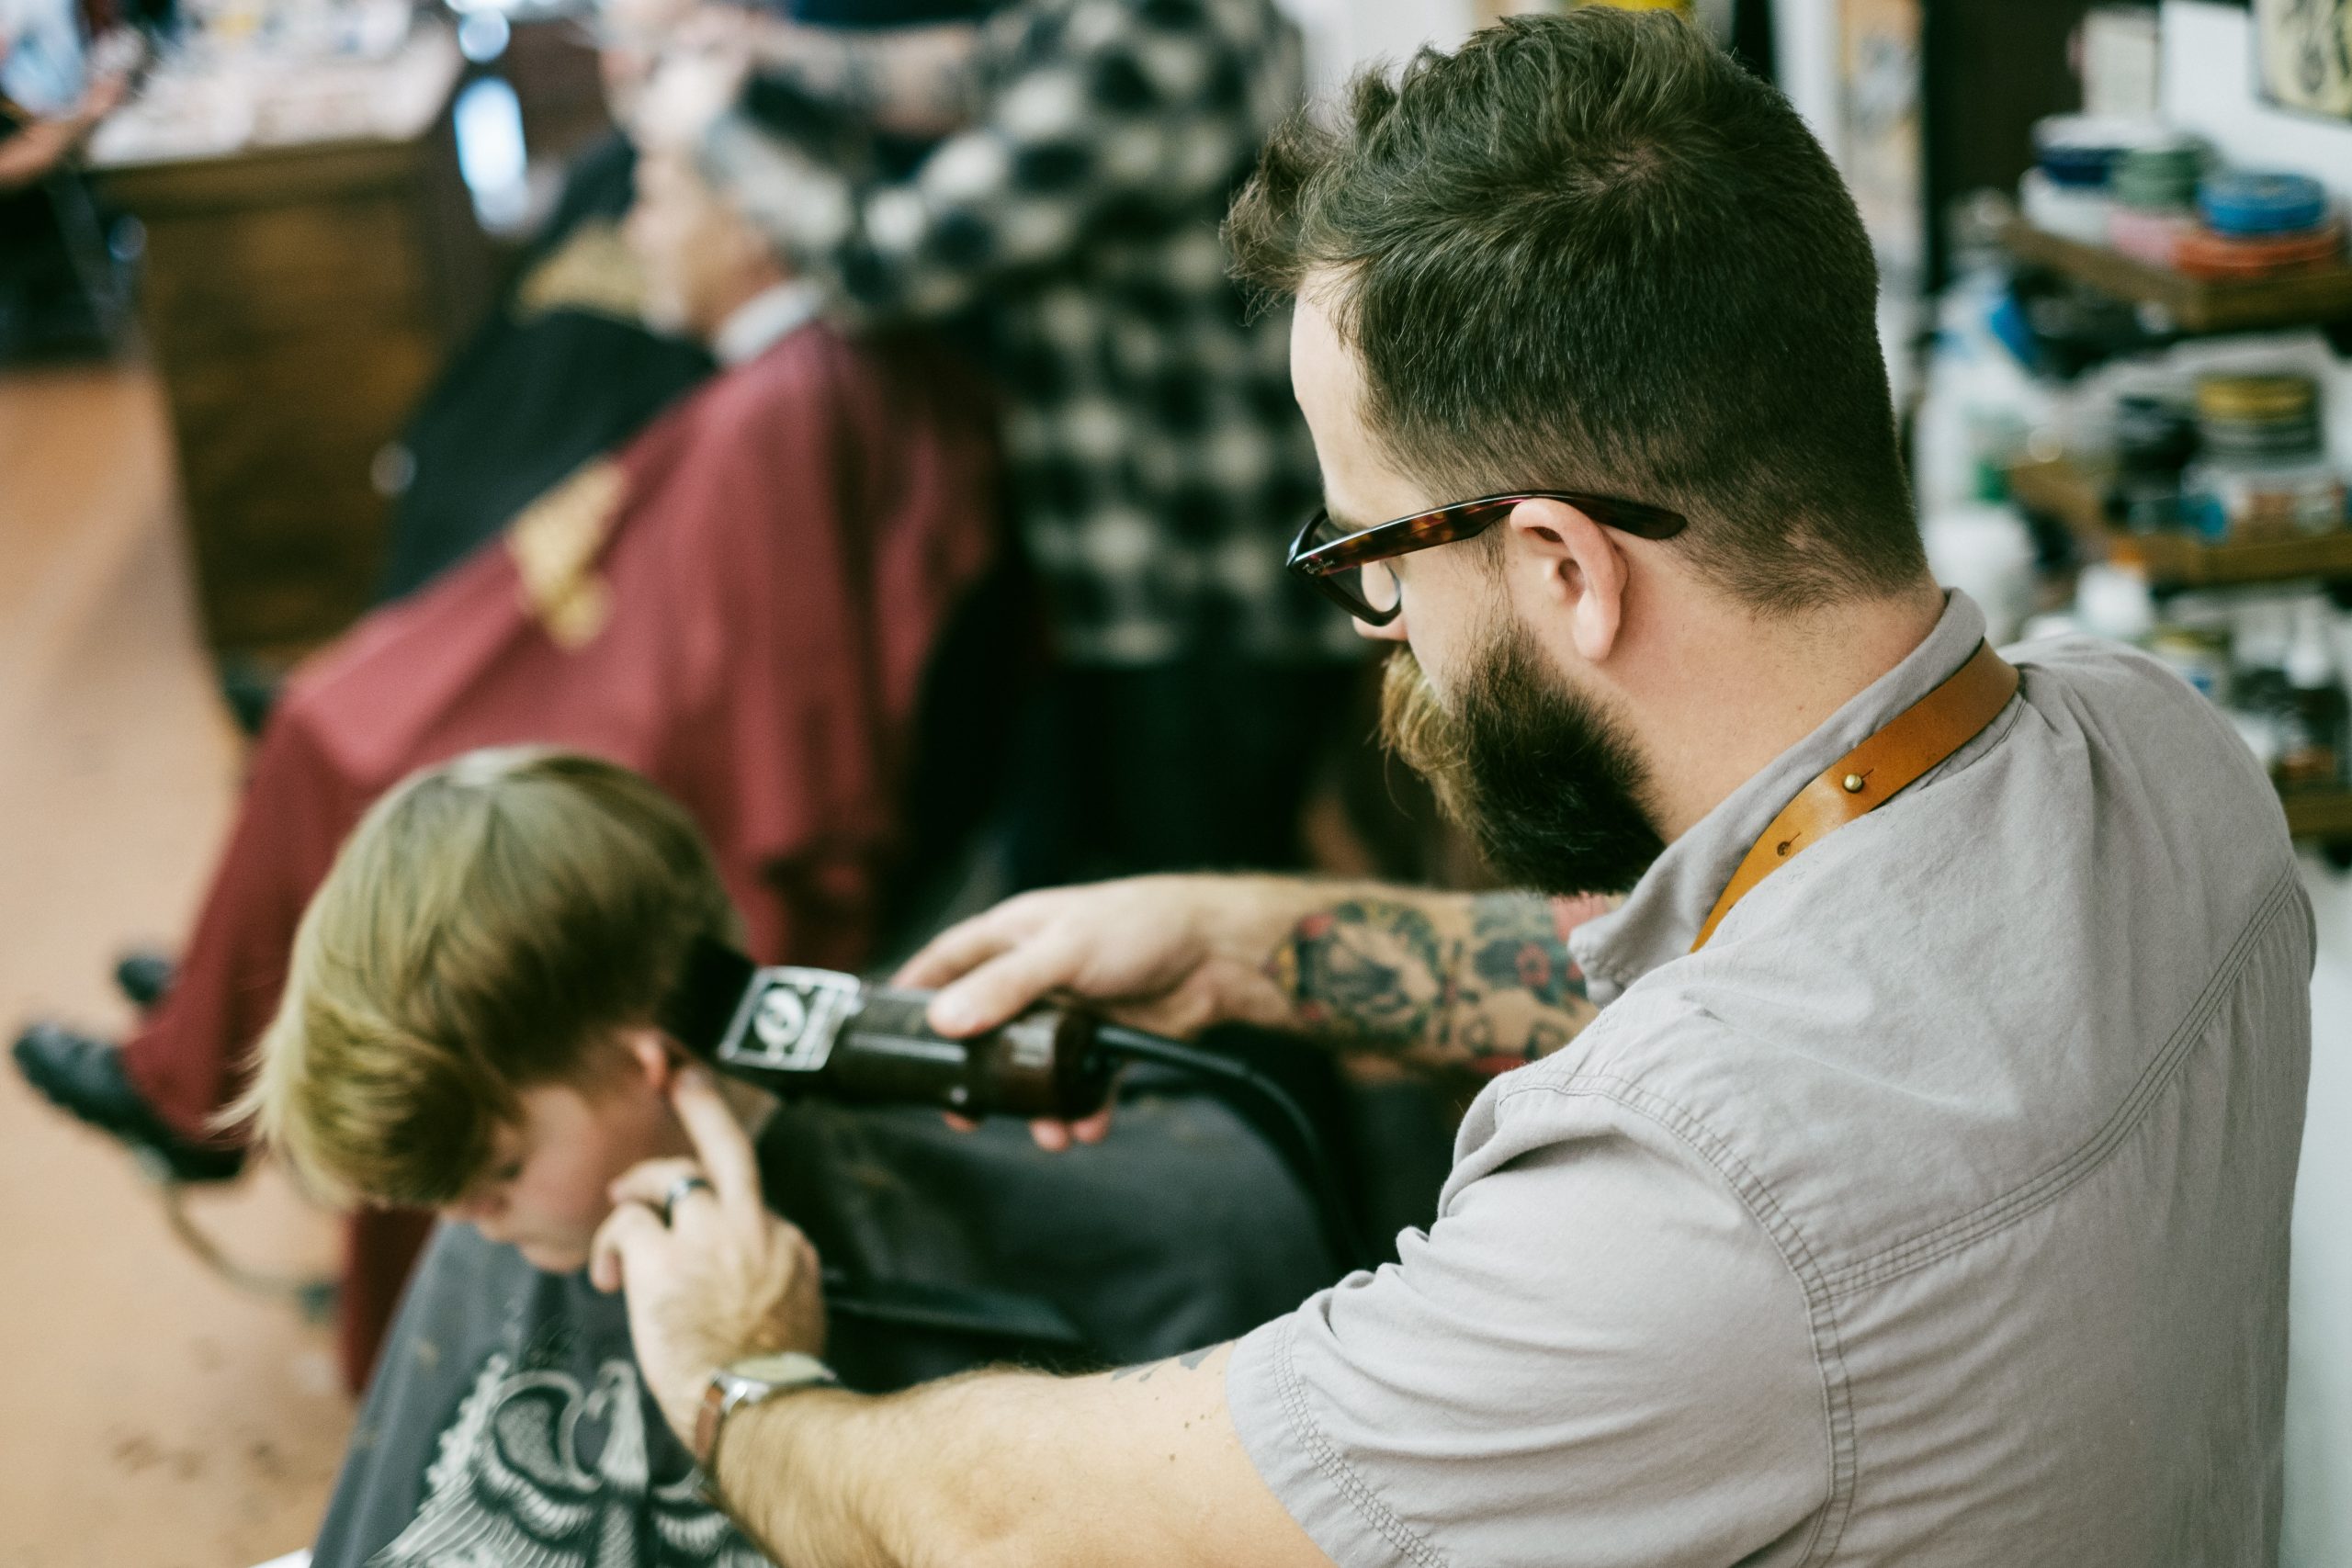 salon marketing ideas man shaving the boy's hair